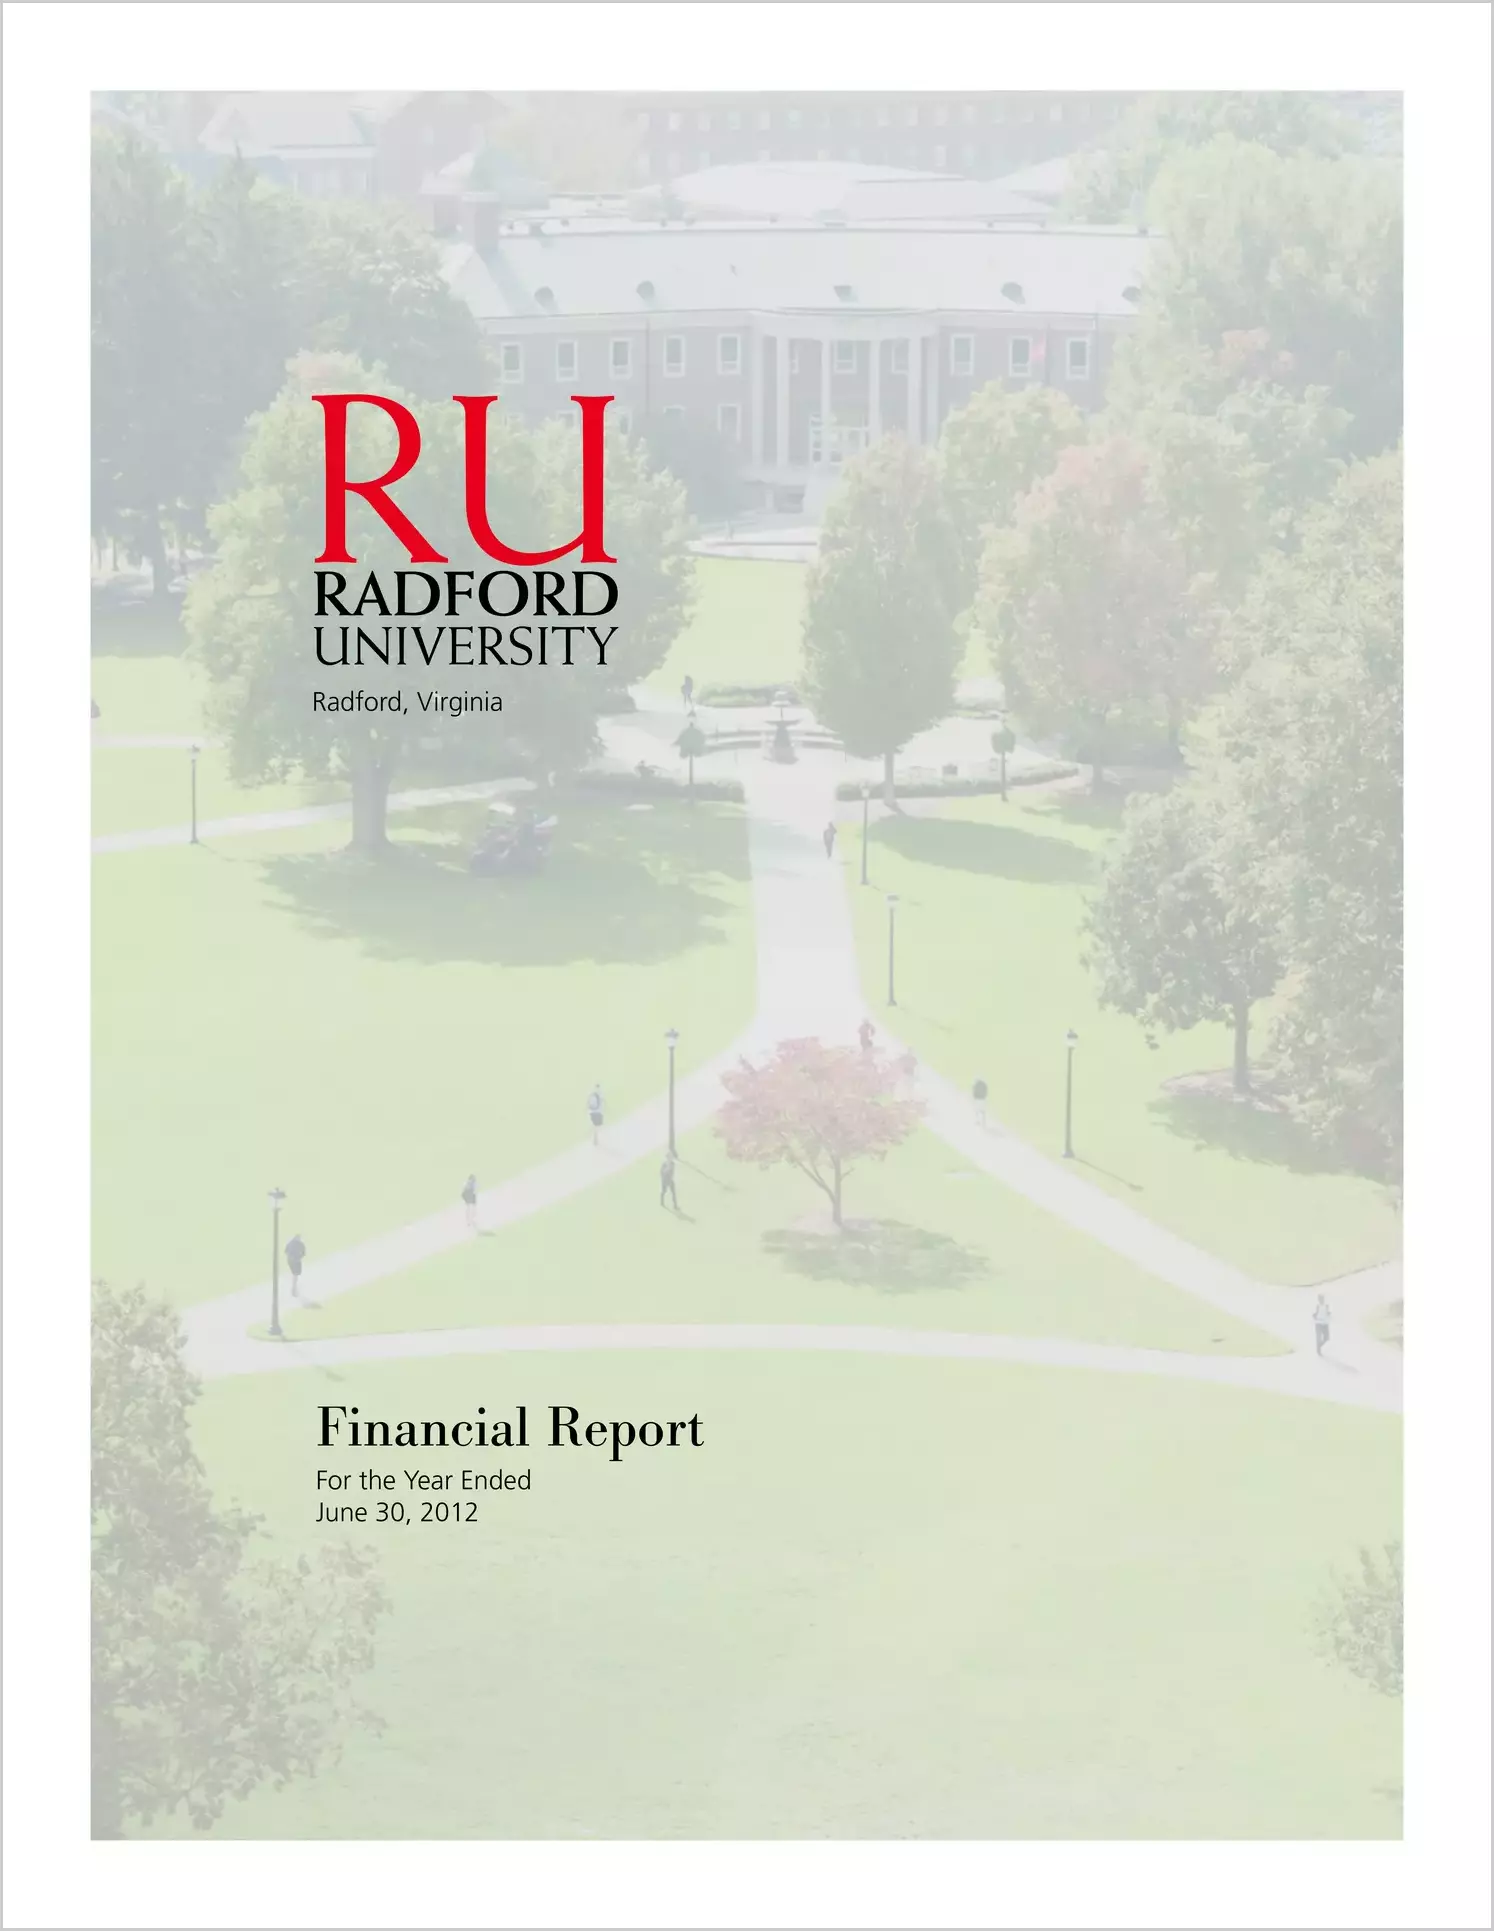 Radford University Financial Statement report on audit for year ending June 30, 2012